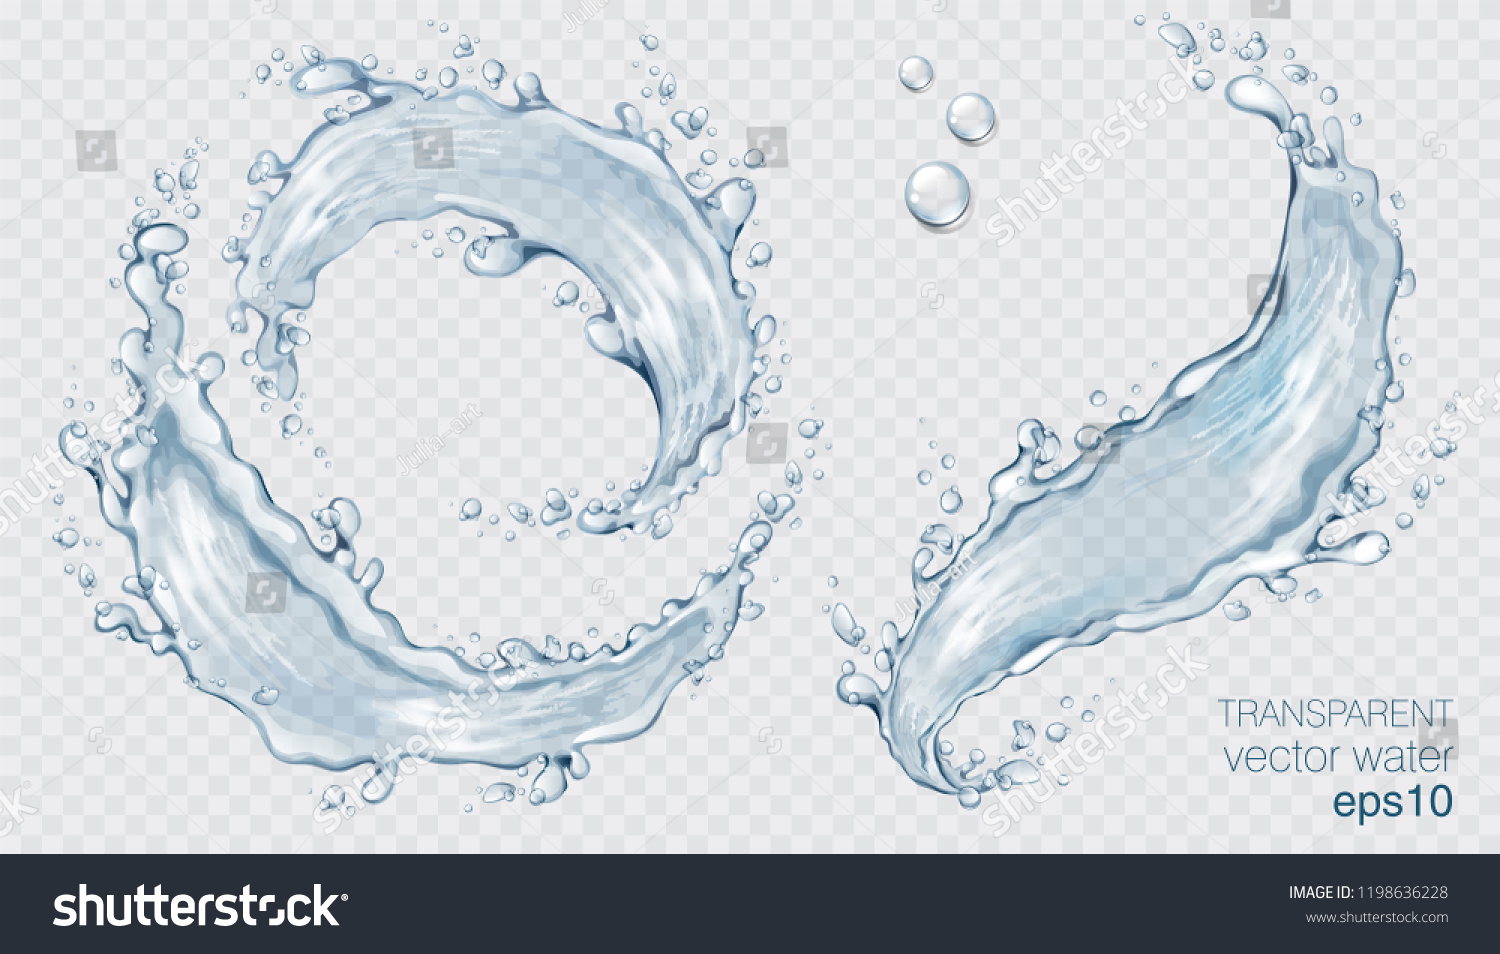 Transparent vector water splash and wave on light background #1198636228